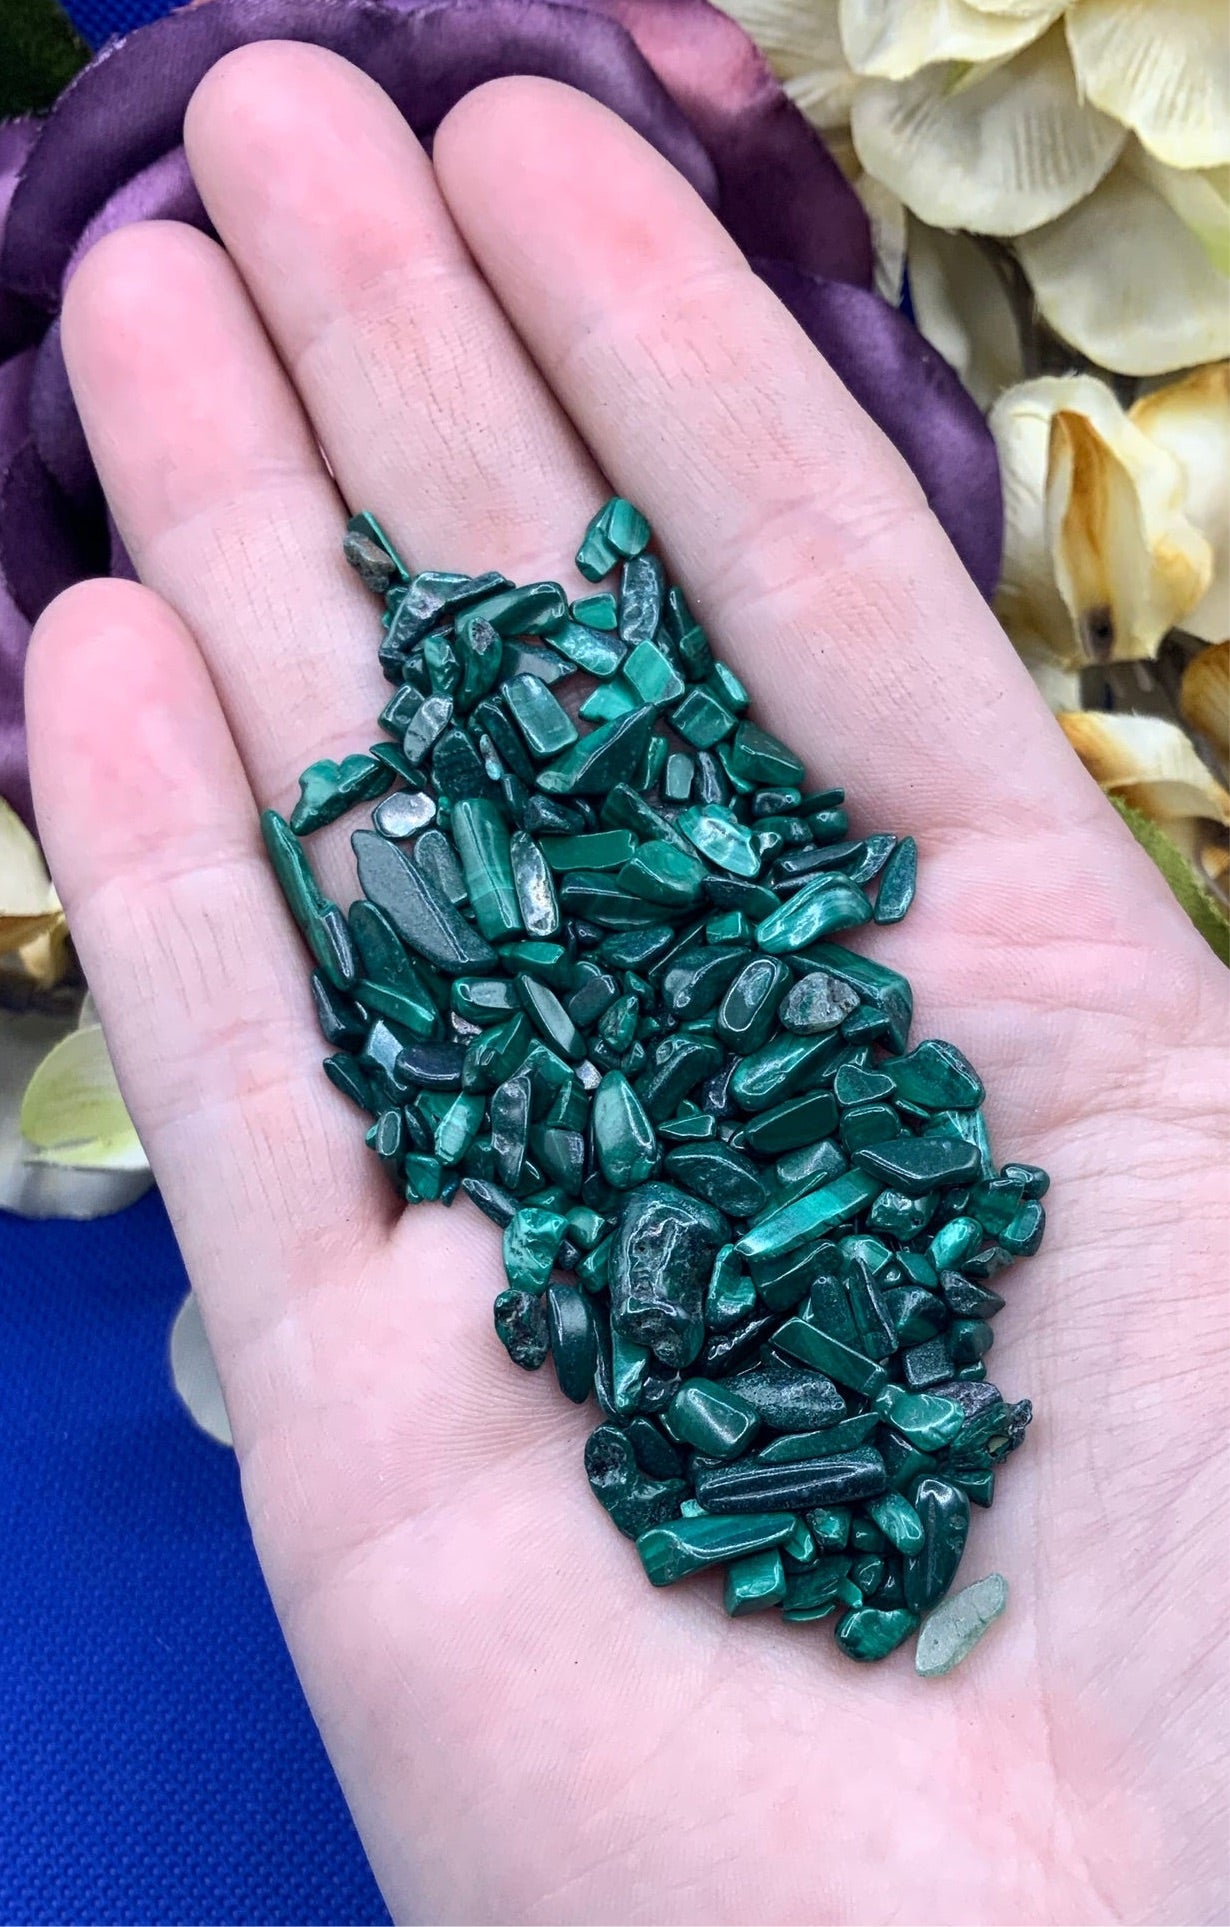 Malachite Crystal Chips - Small - AA Grade - Neatos Elements